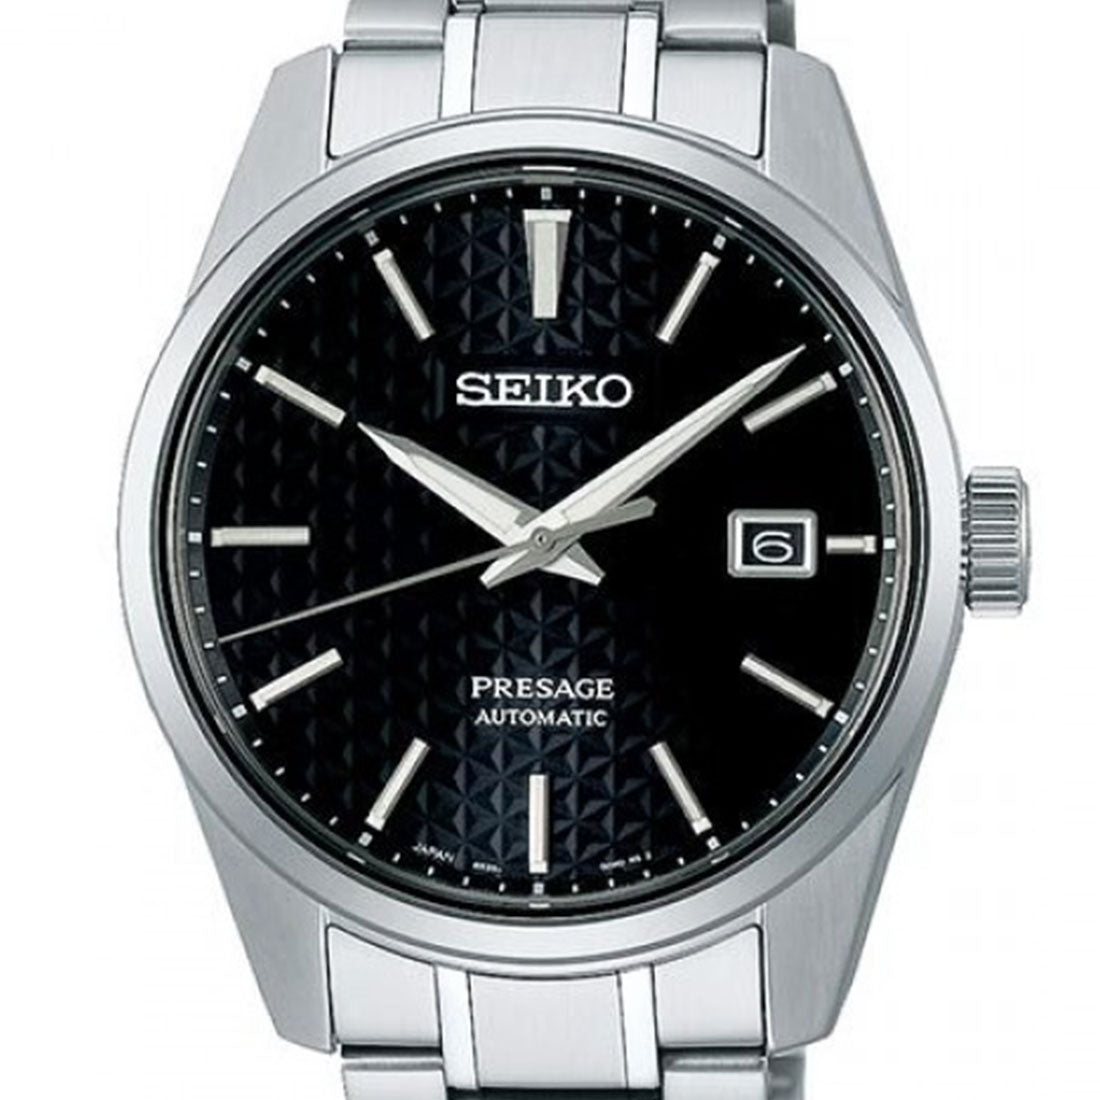 Seiko Presage Automatic JDM Hemp Leaf Dial Watch SARX083 -Seiko